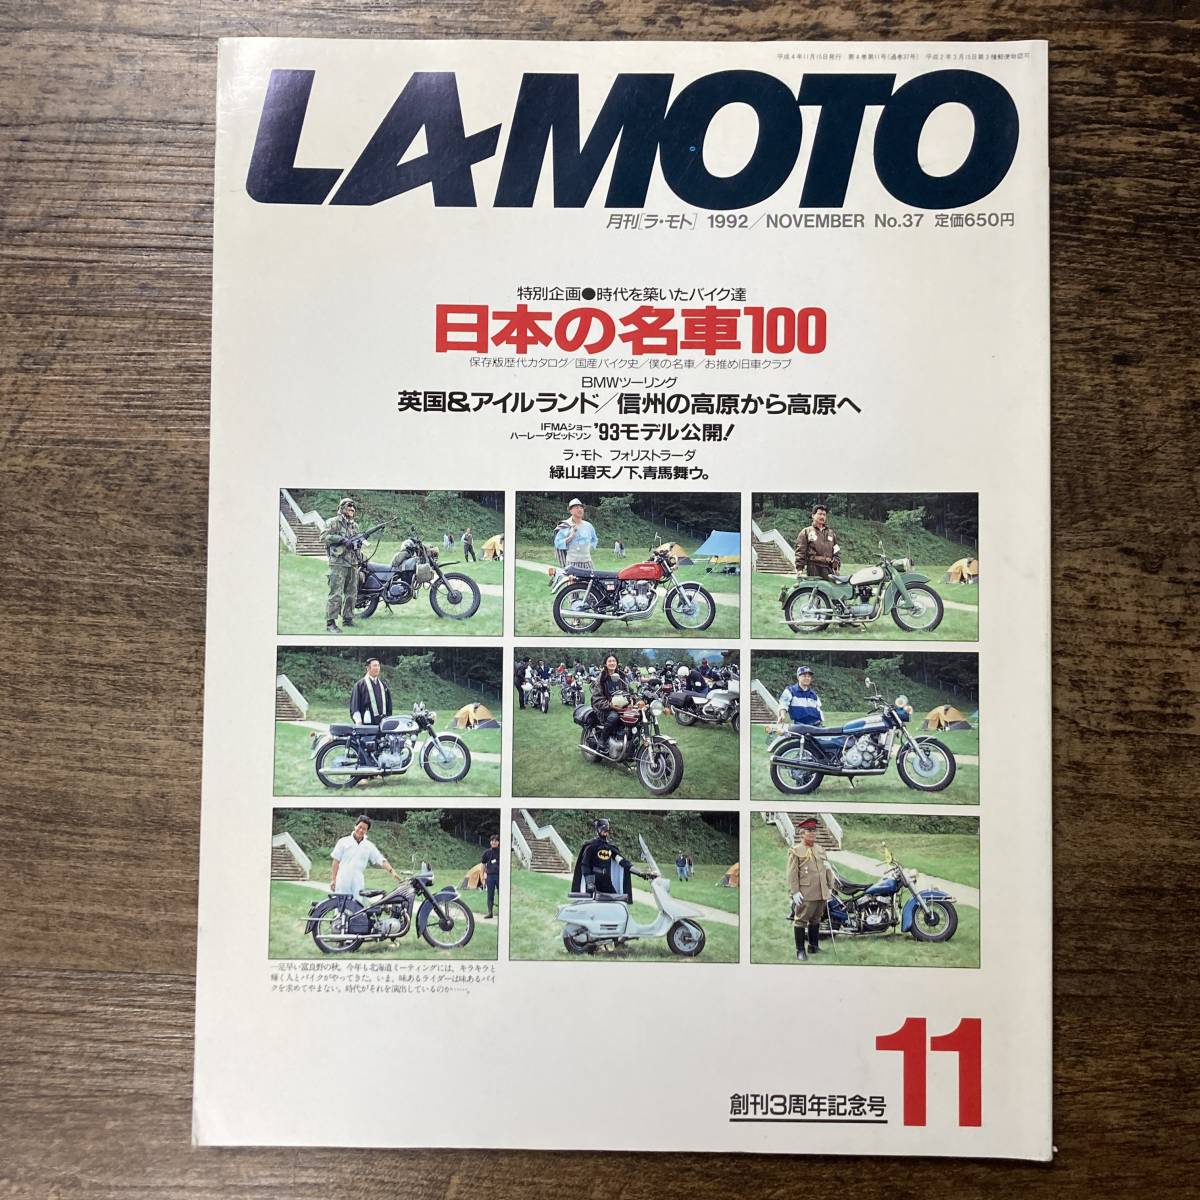 S-3473■月刊ラ・モト LAMOTO 1992年 11月号 NO.37■造形社■平成4年11月15日発行■の画像1